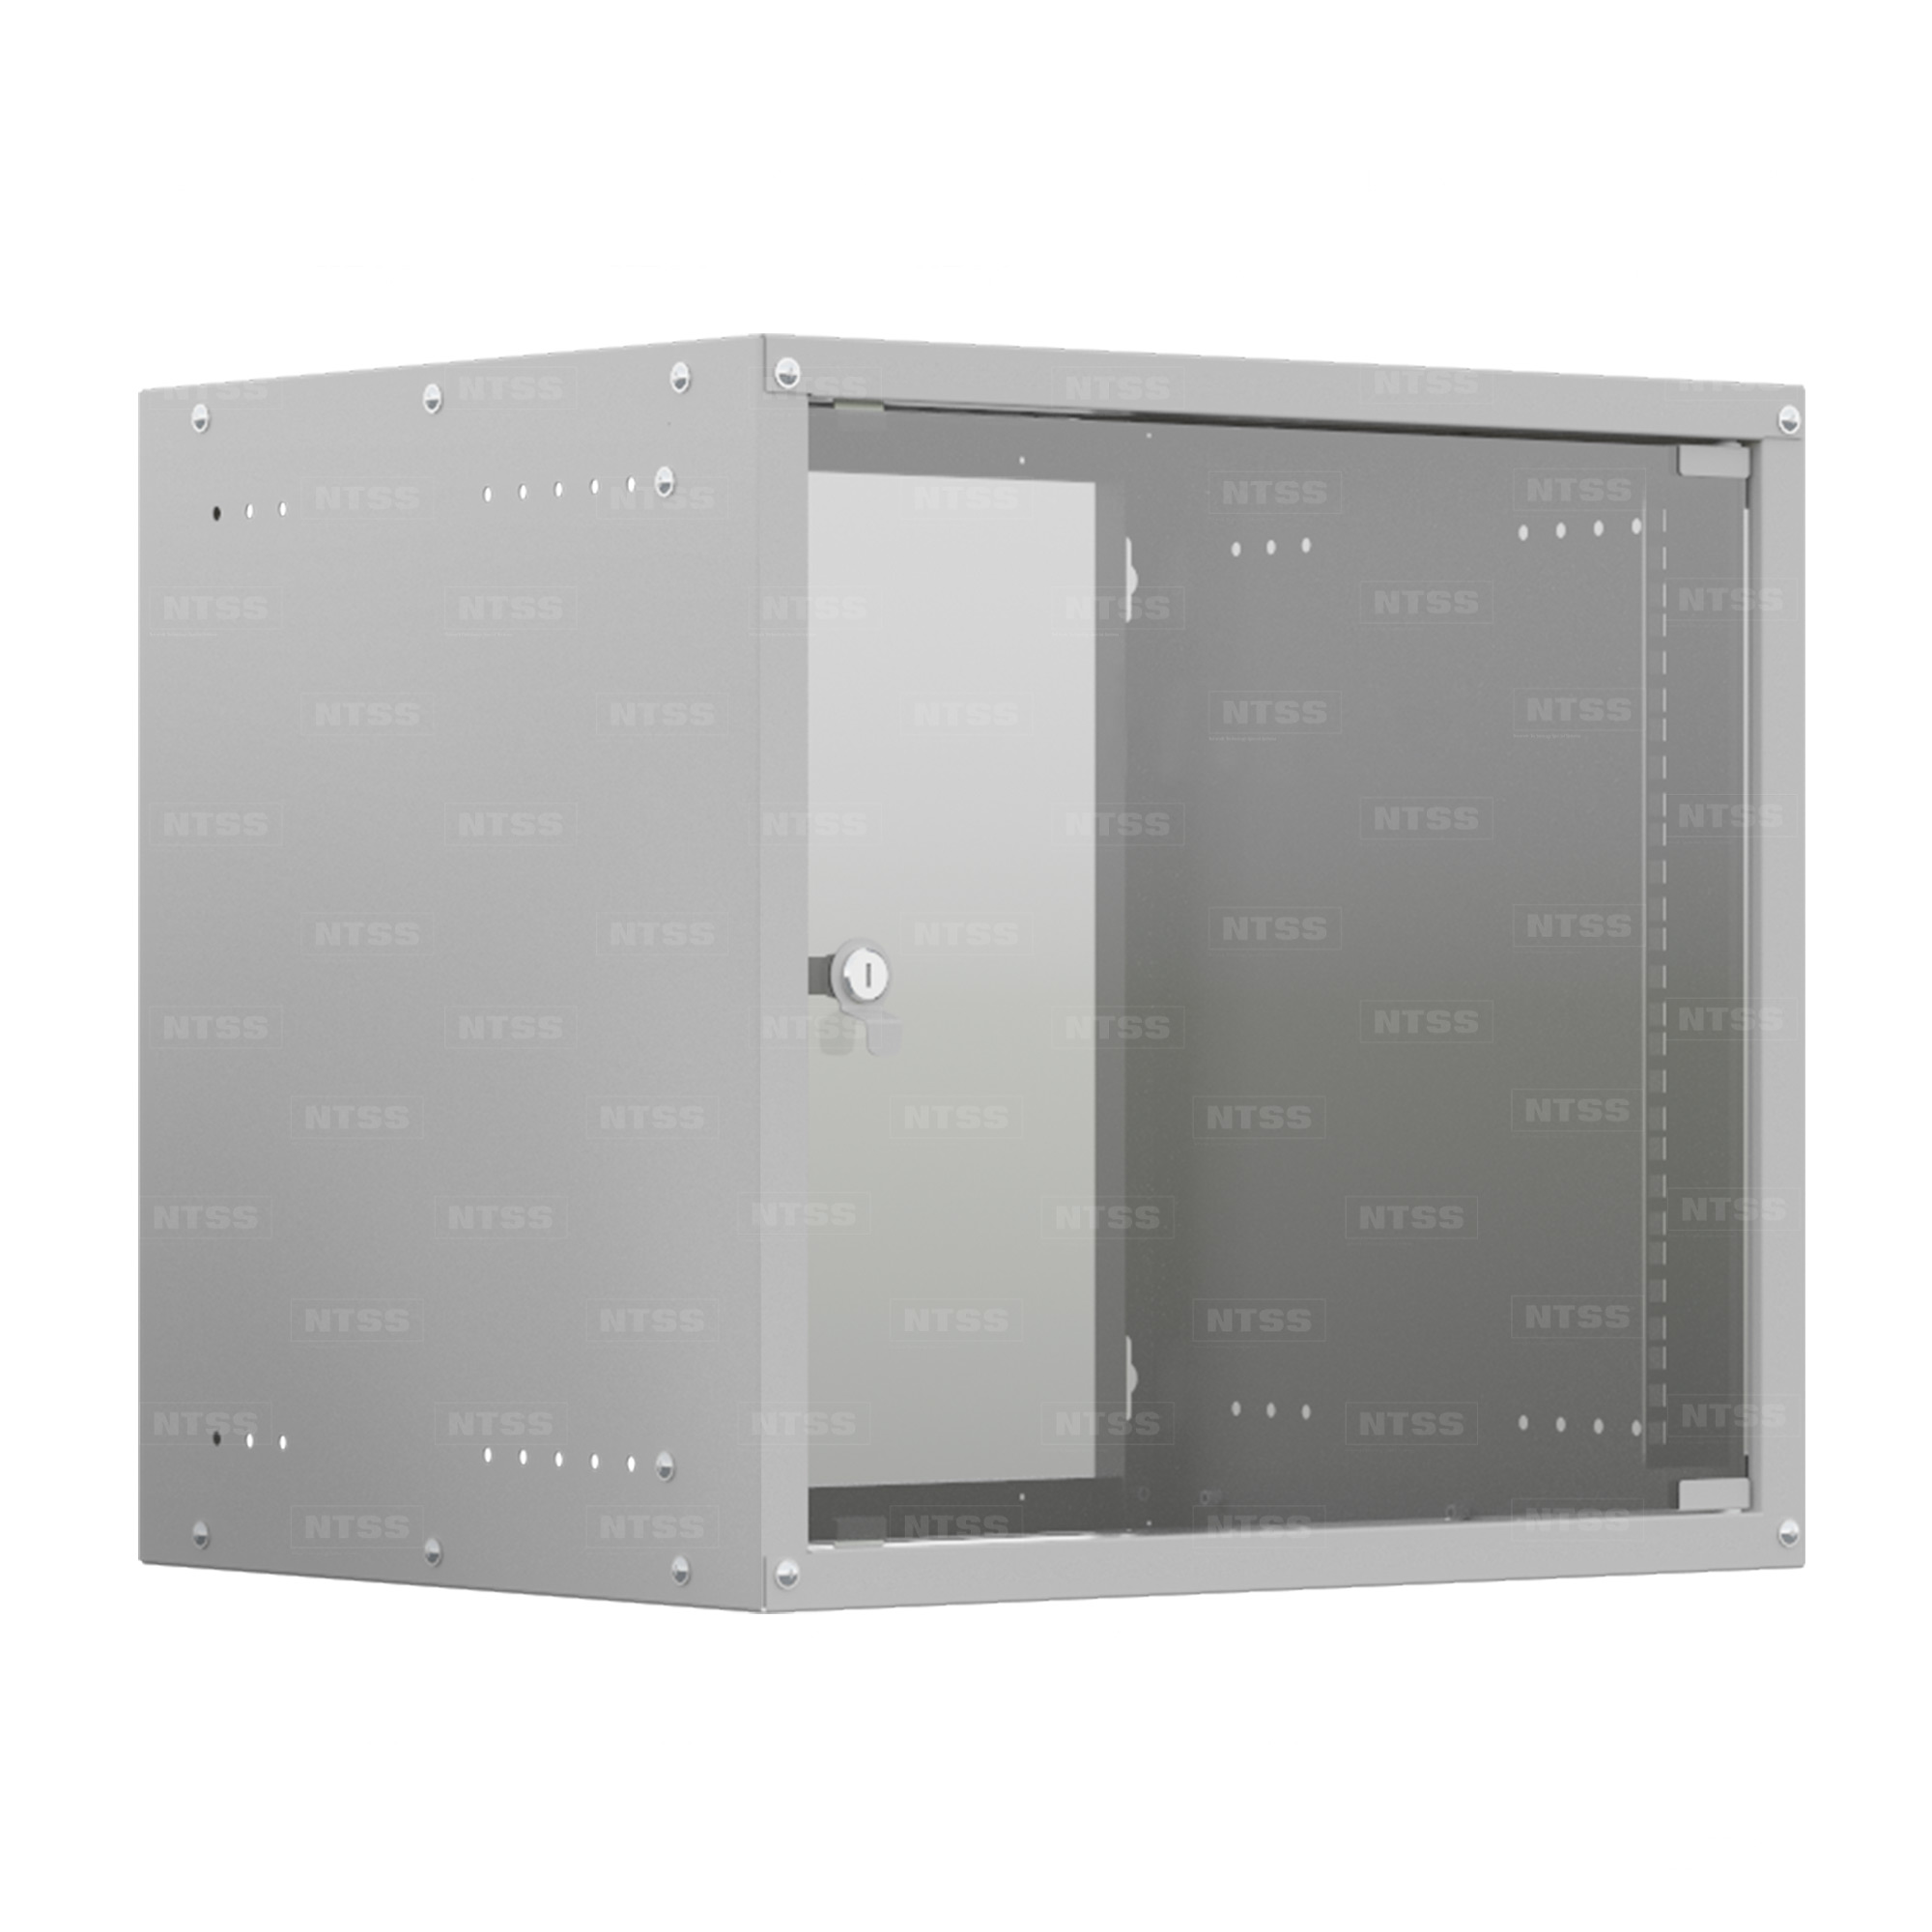 Шкаф телекоммуникационный настенный 15U 550x600 мм, стекло/металл, серый, разборный, NTSS LIME NTSS-WL15U5560GS (NTSS-WL15U5560GS)